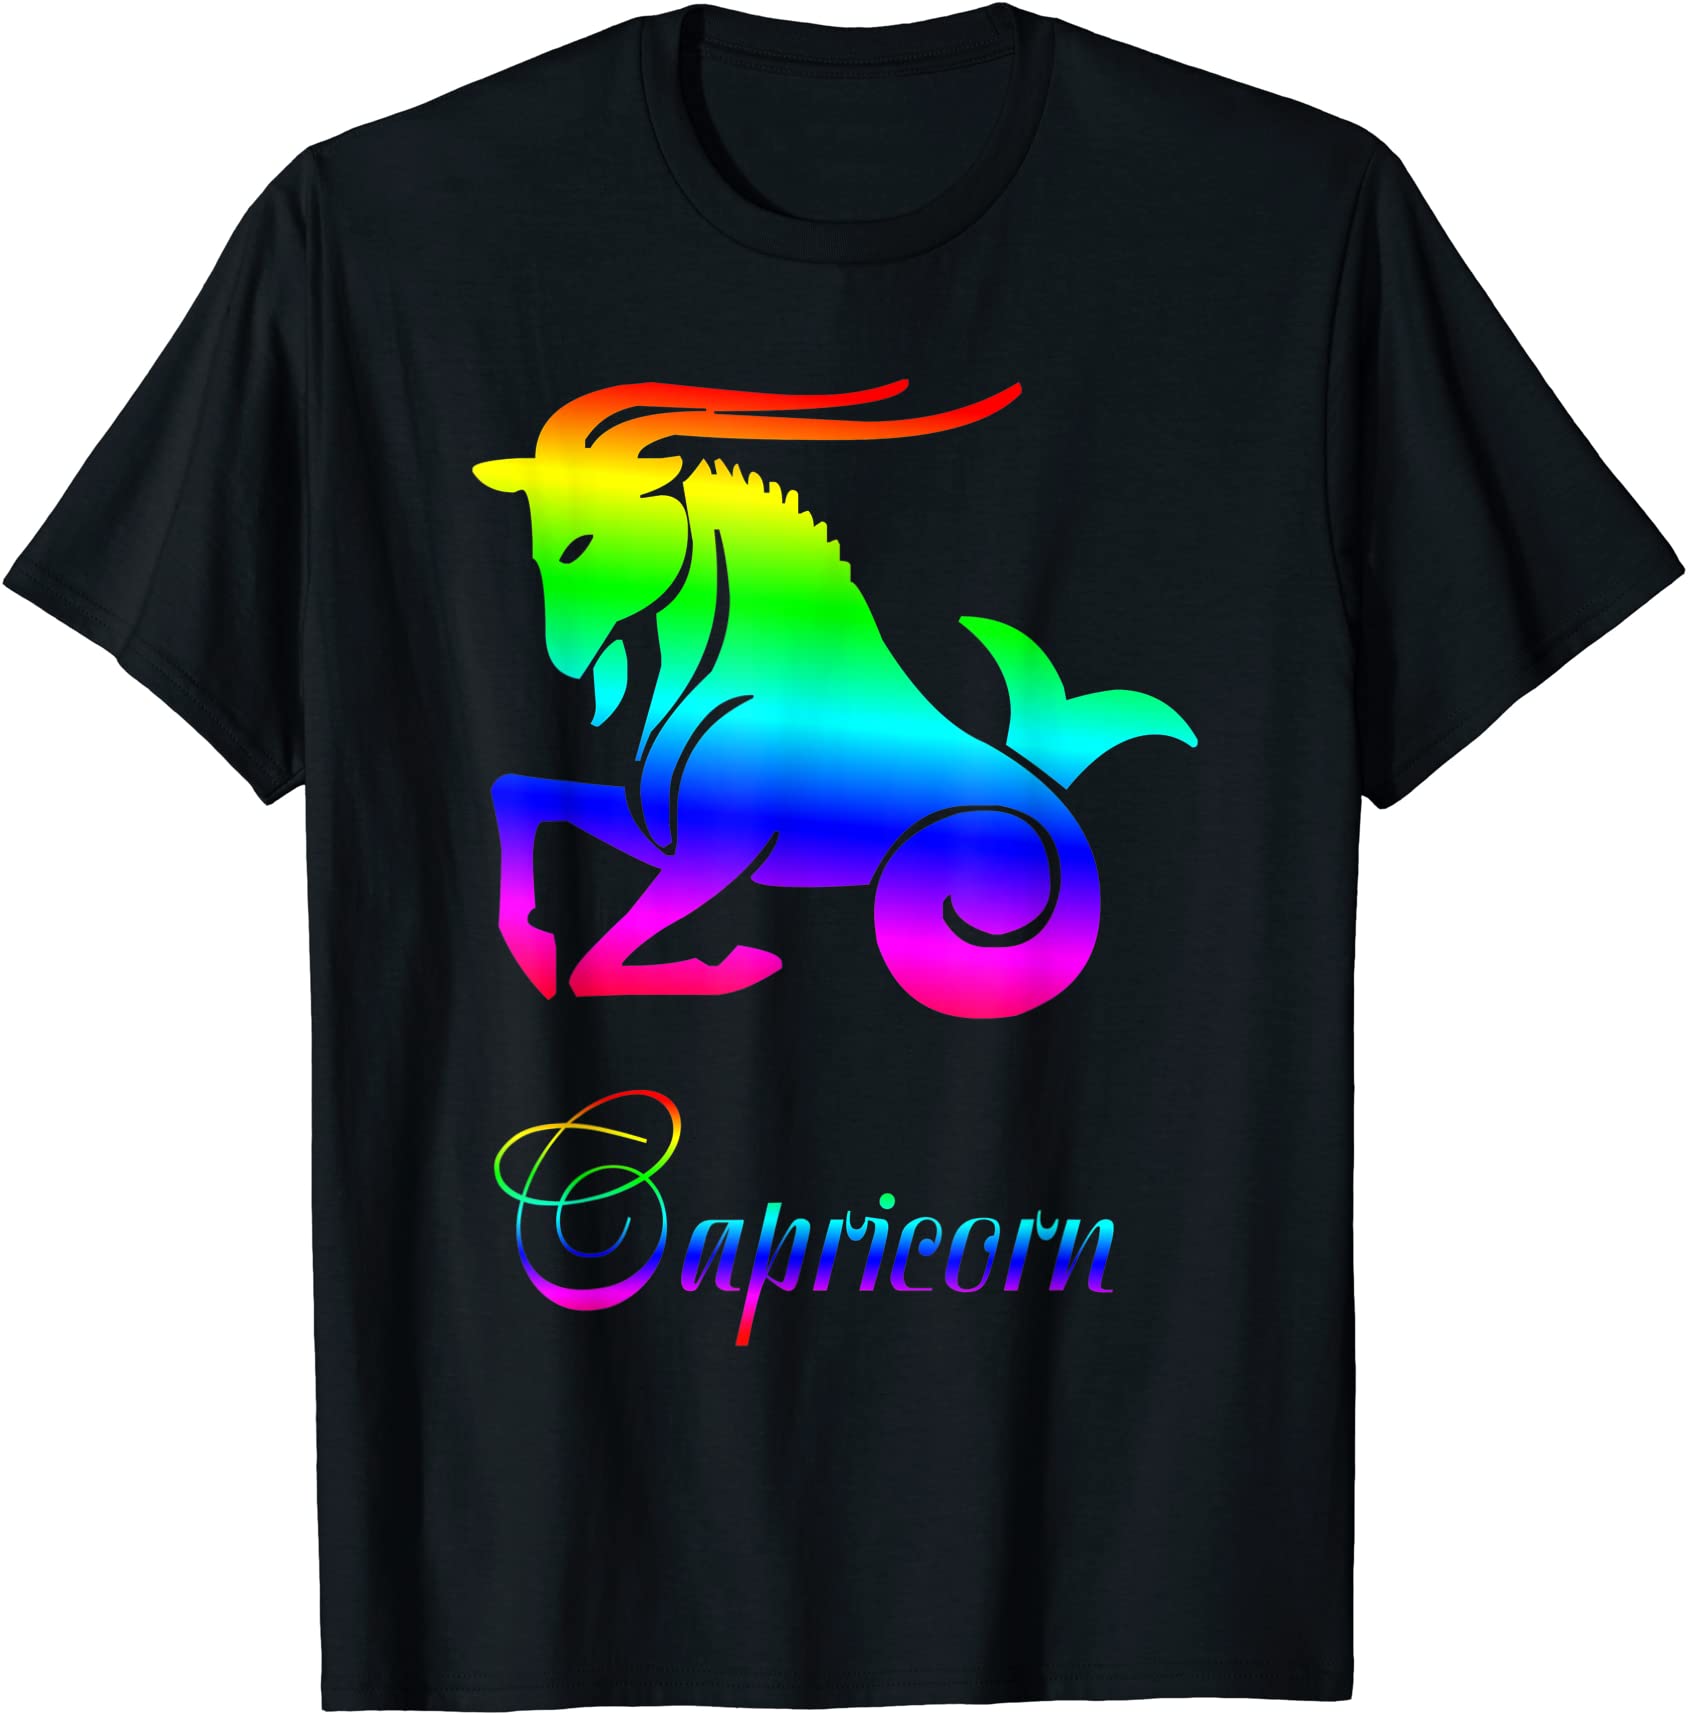 zodiac capricorn t shirt men - Buy t-shirt designs